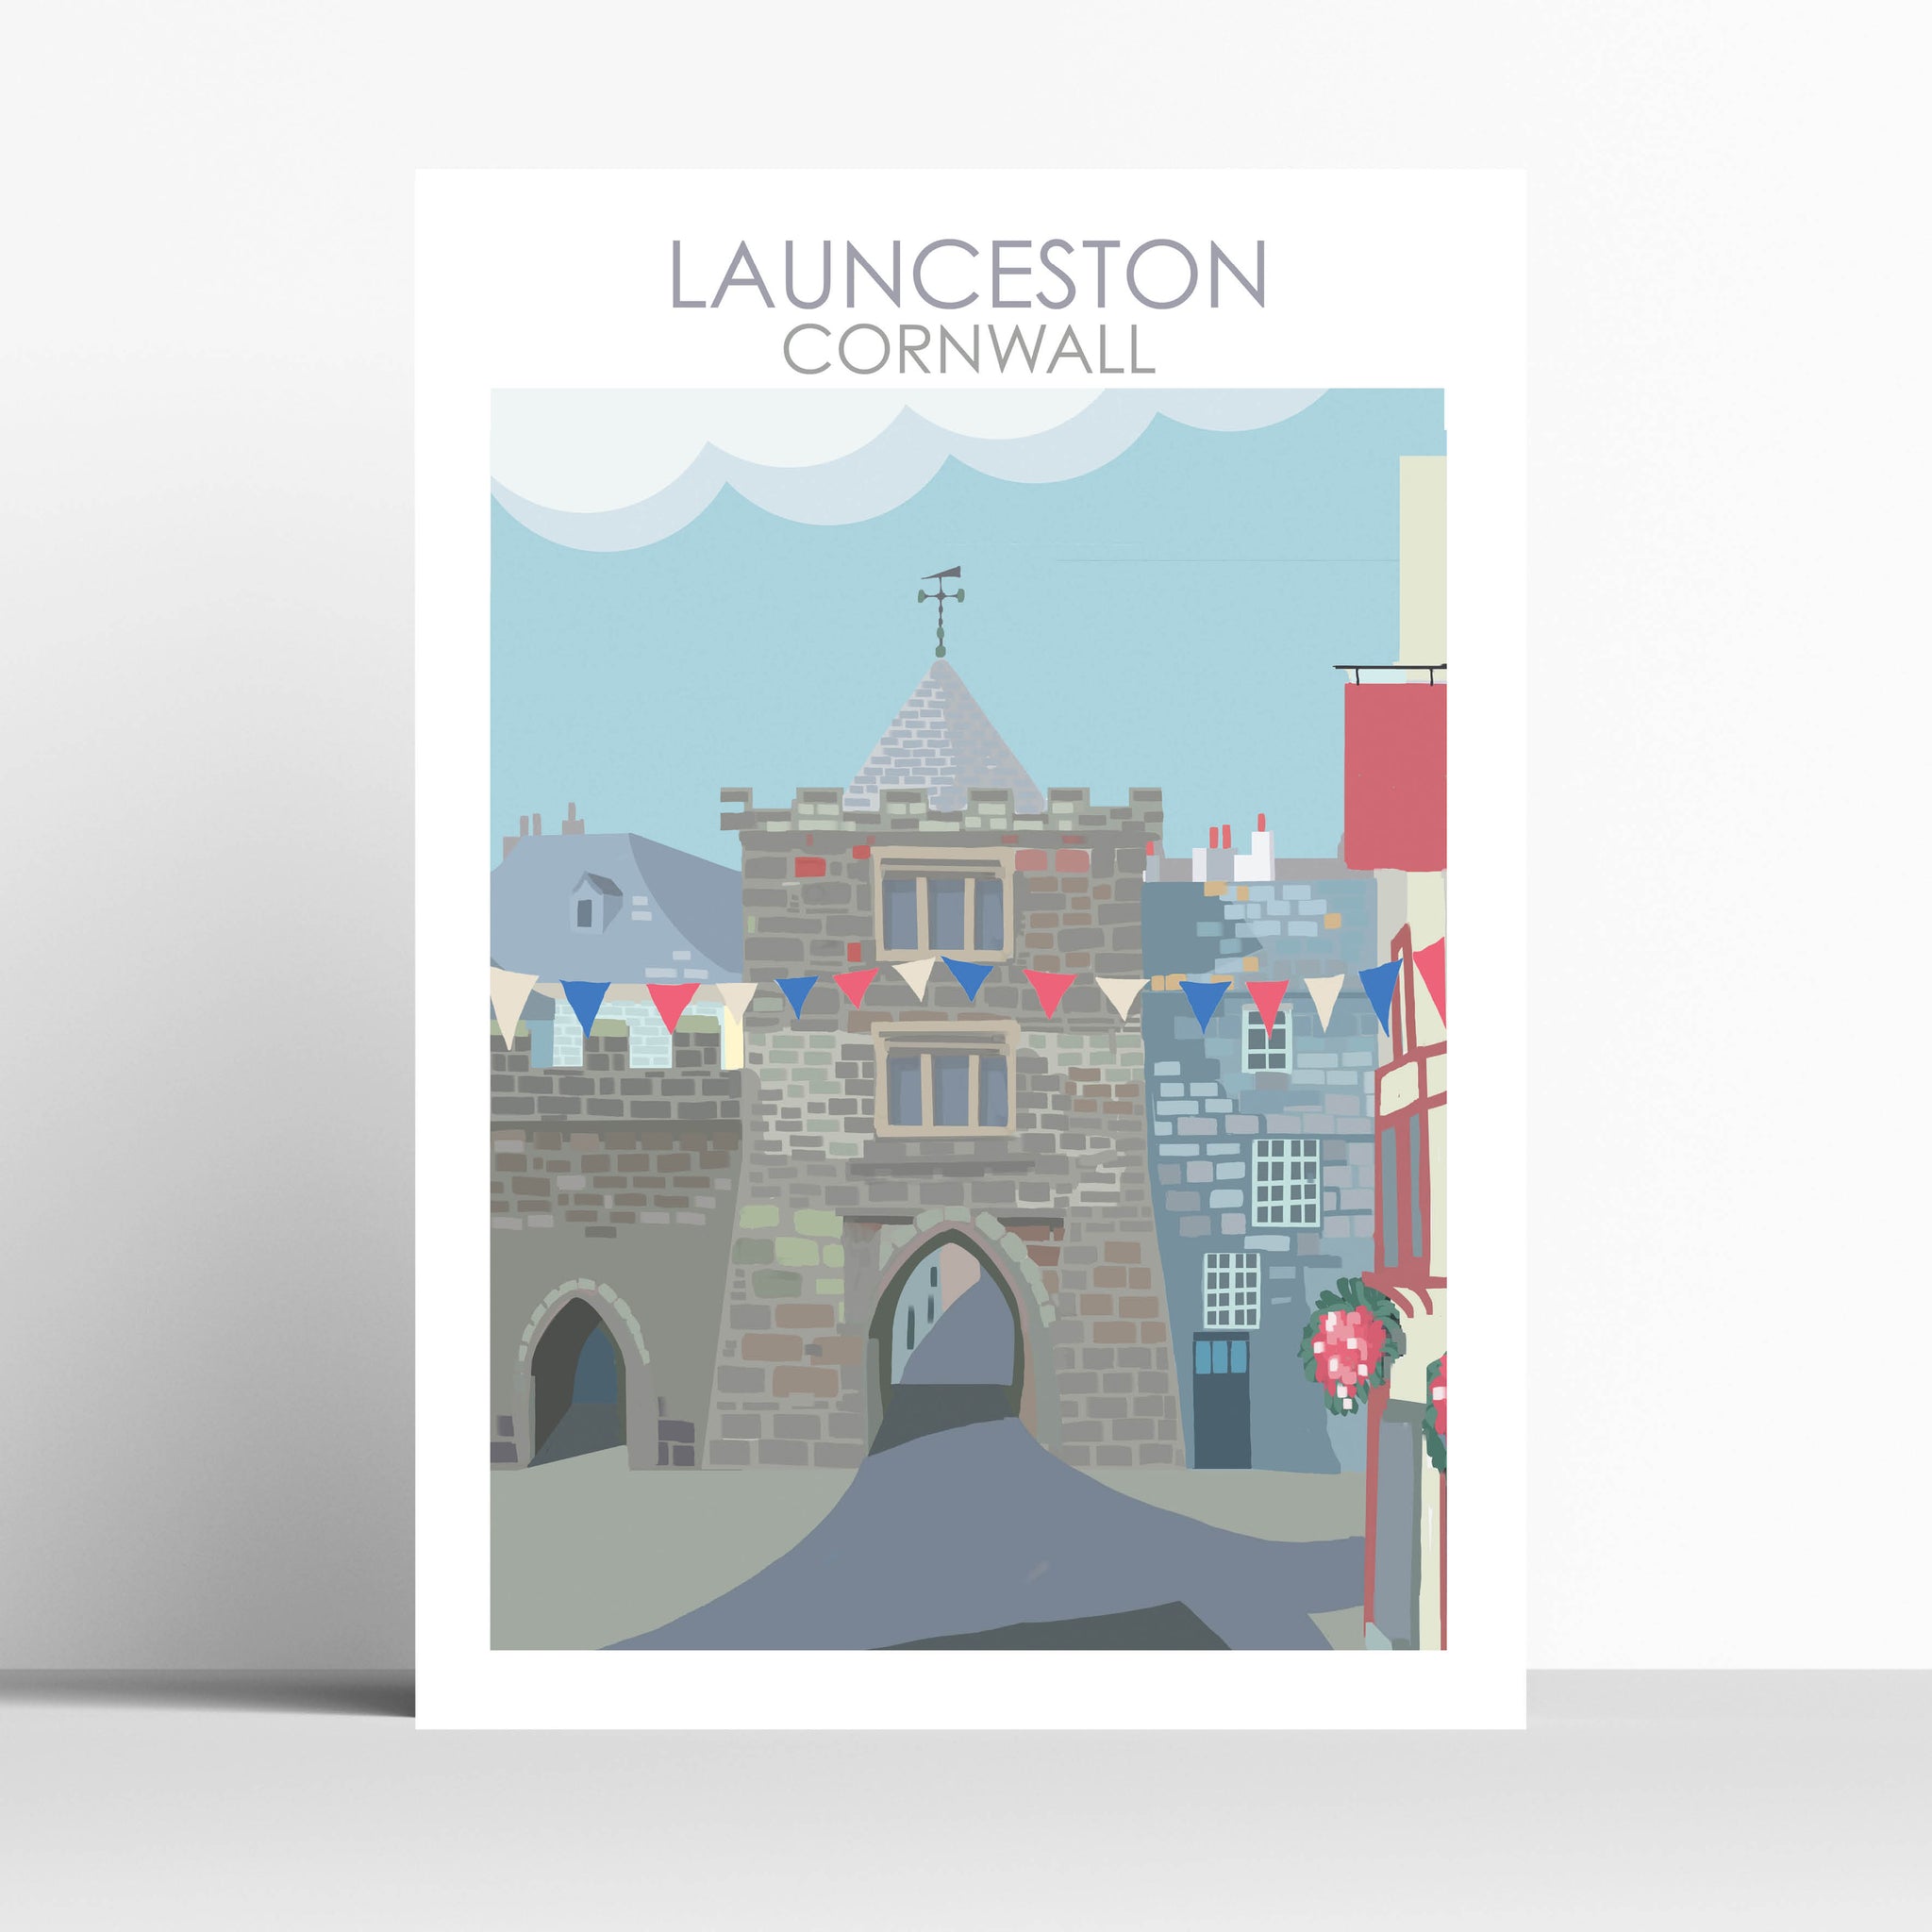 Launceston South Gate North Cornwall Travel Print